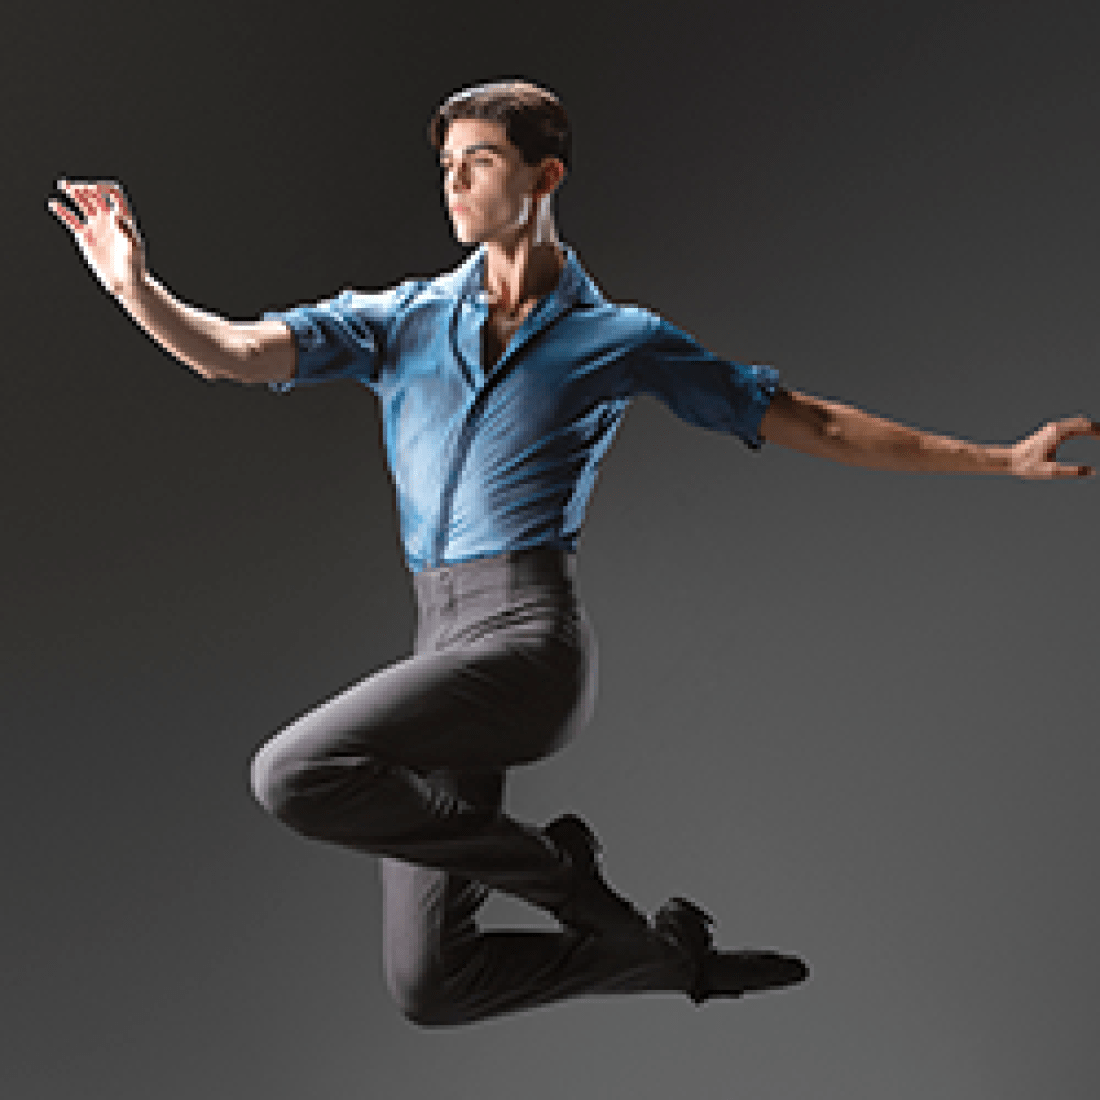 Male ballet dancer leaping